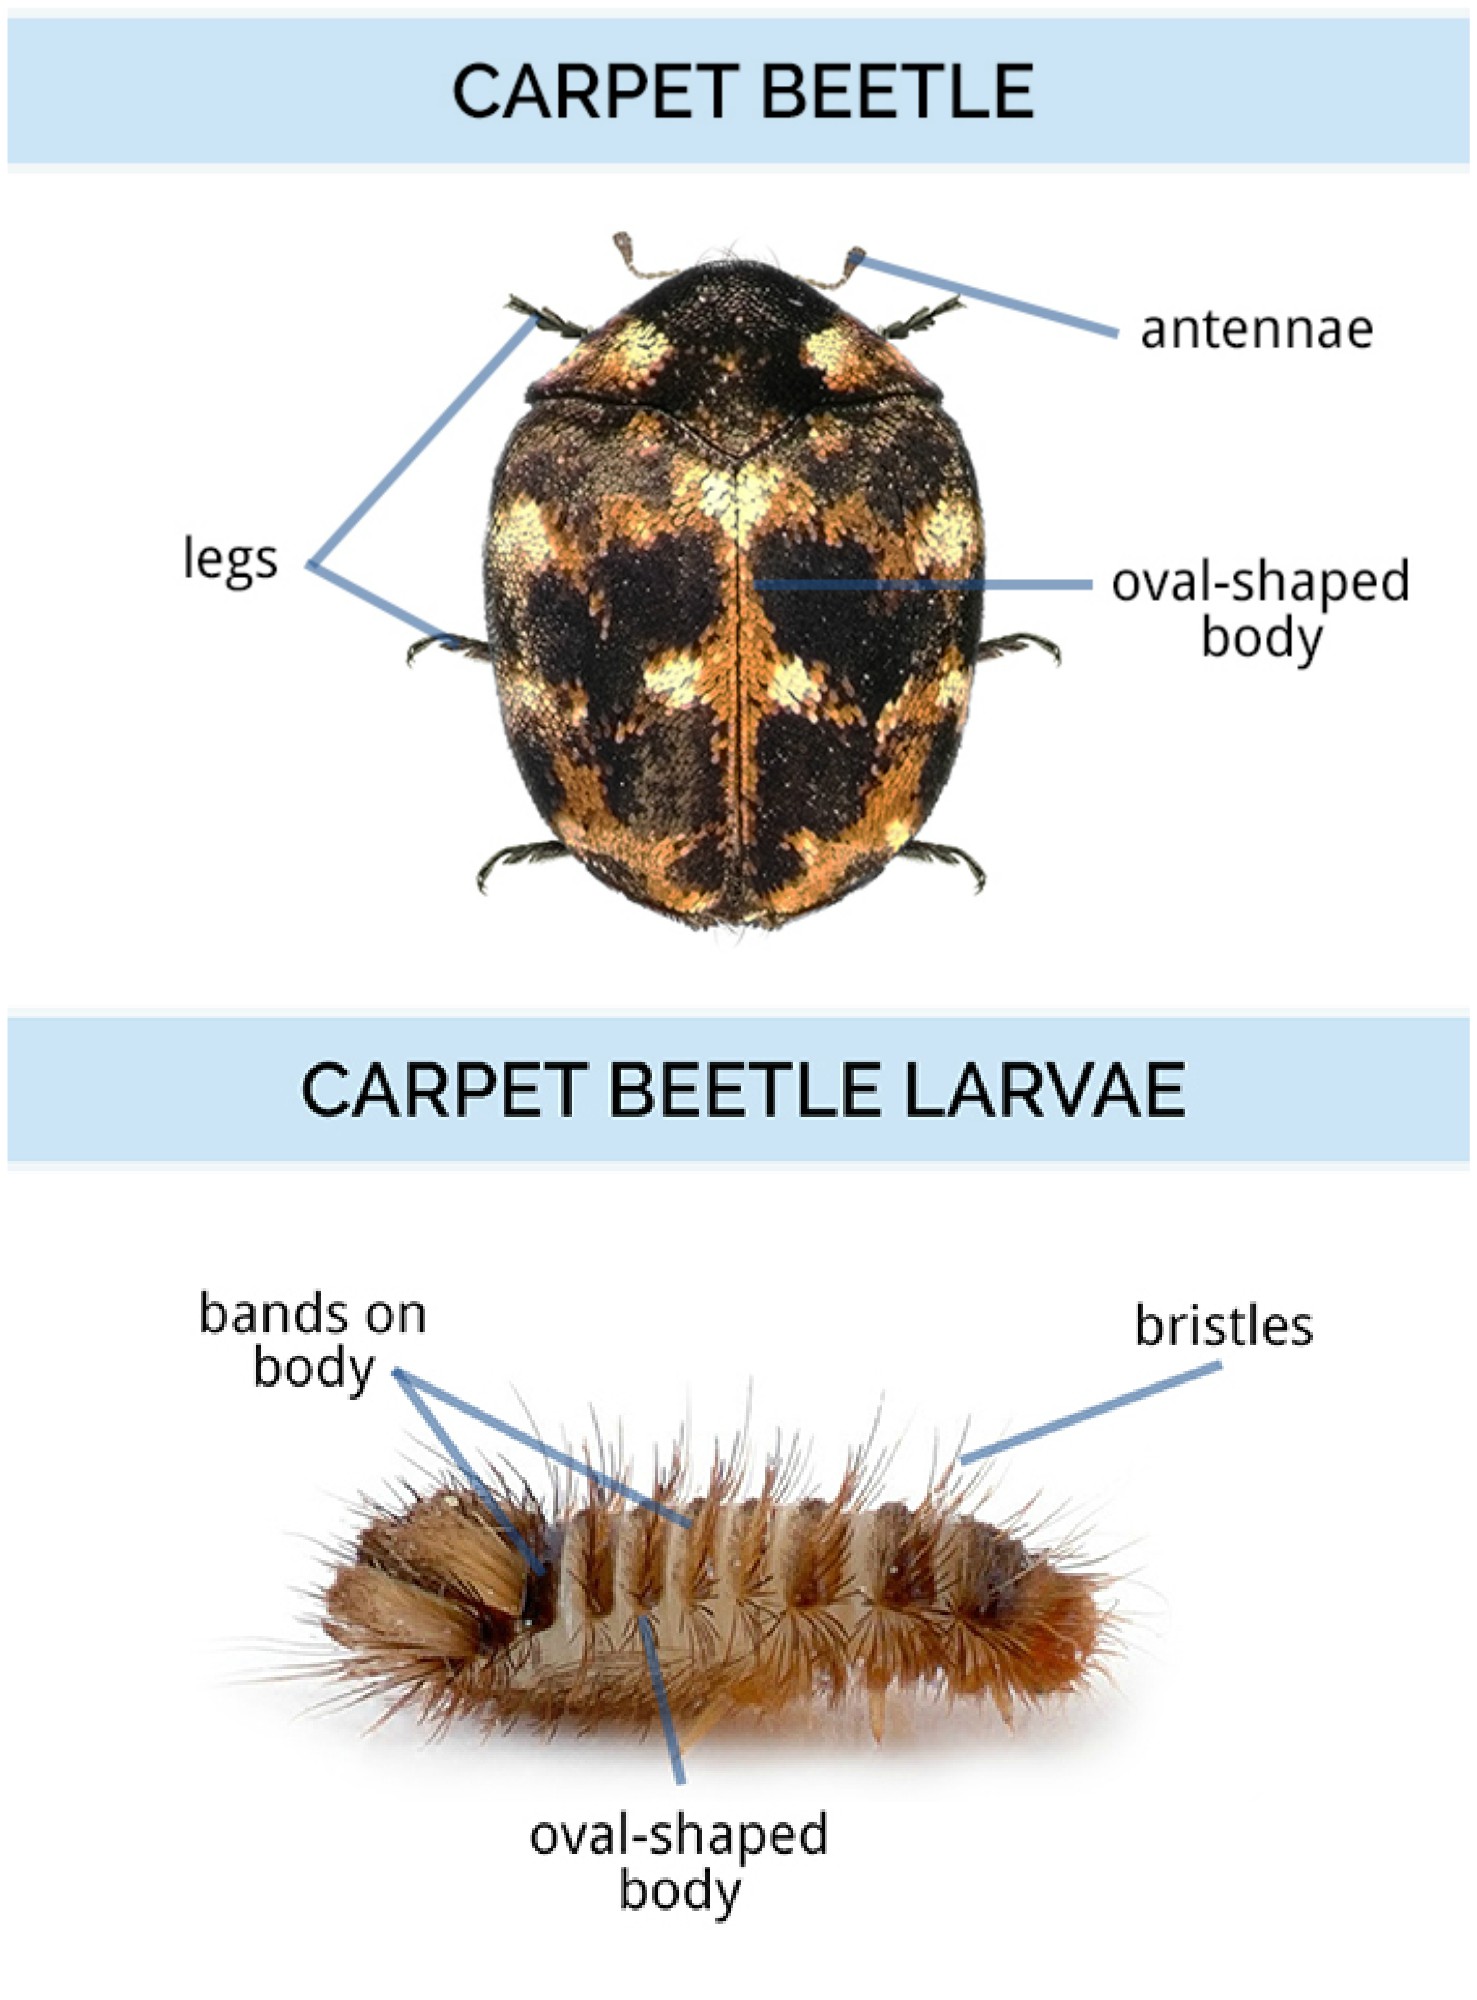 What Do Carpet Beetles Look Like? 